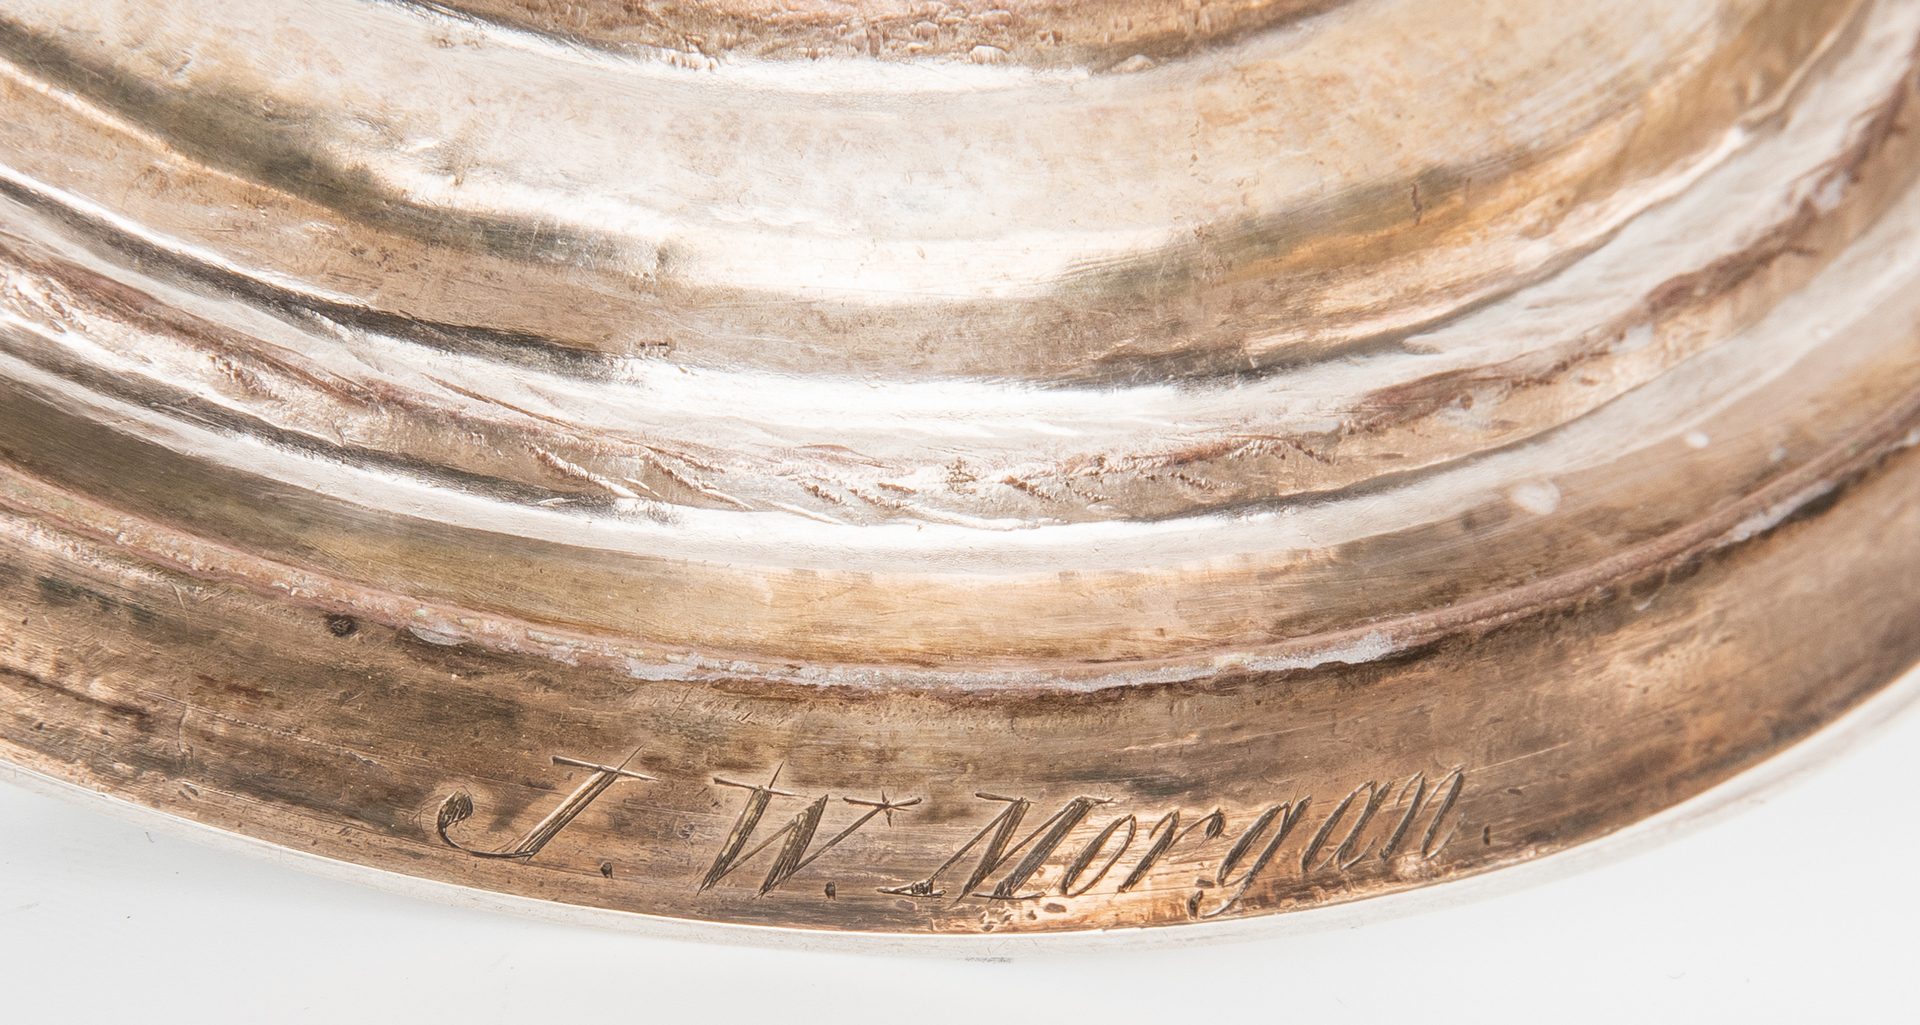 Lot 56: Philadelphia Coin Silver Covered Sugar Bowl